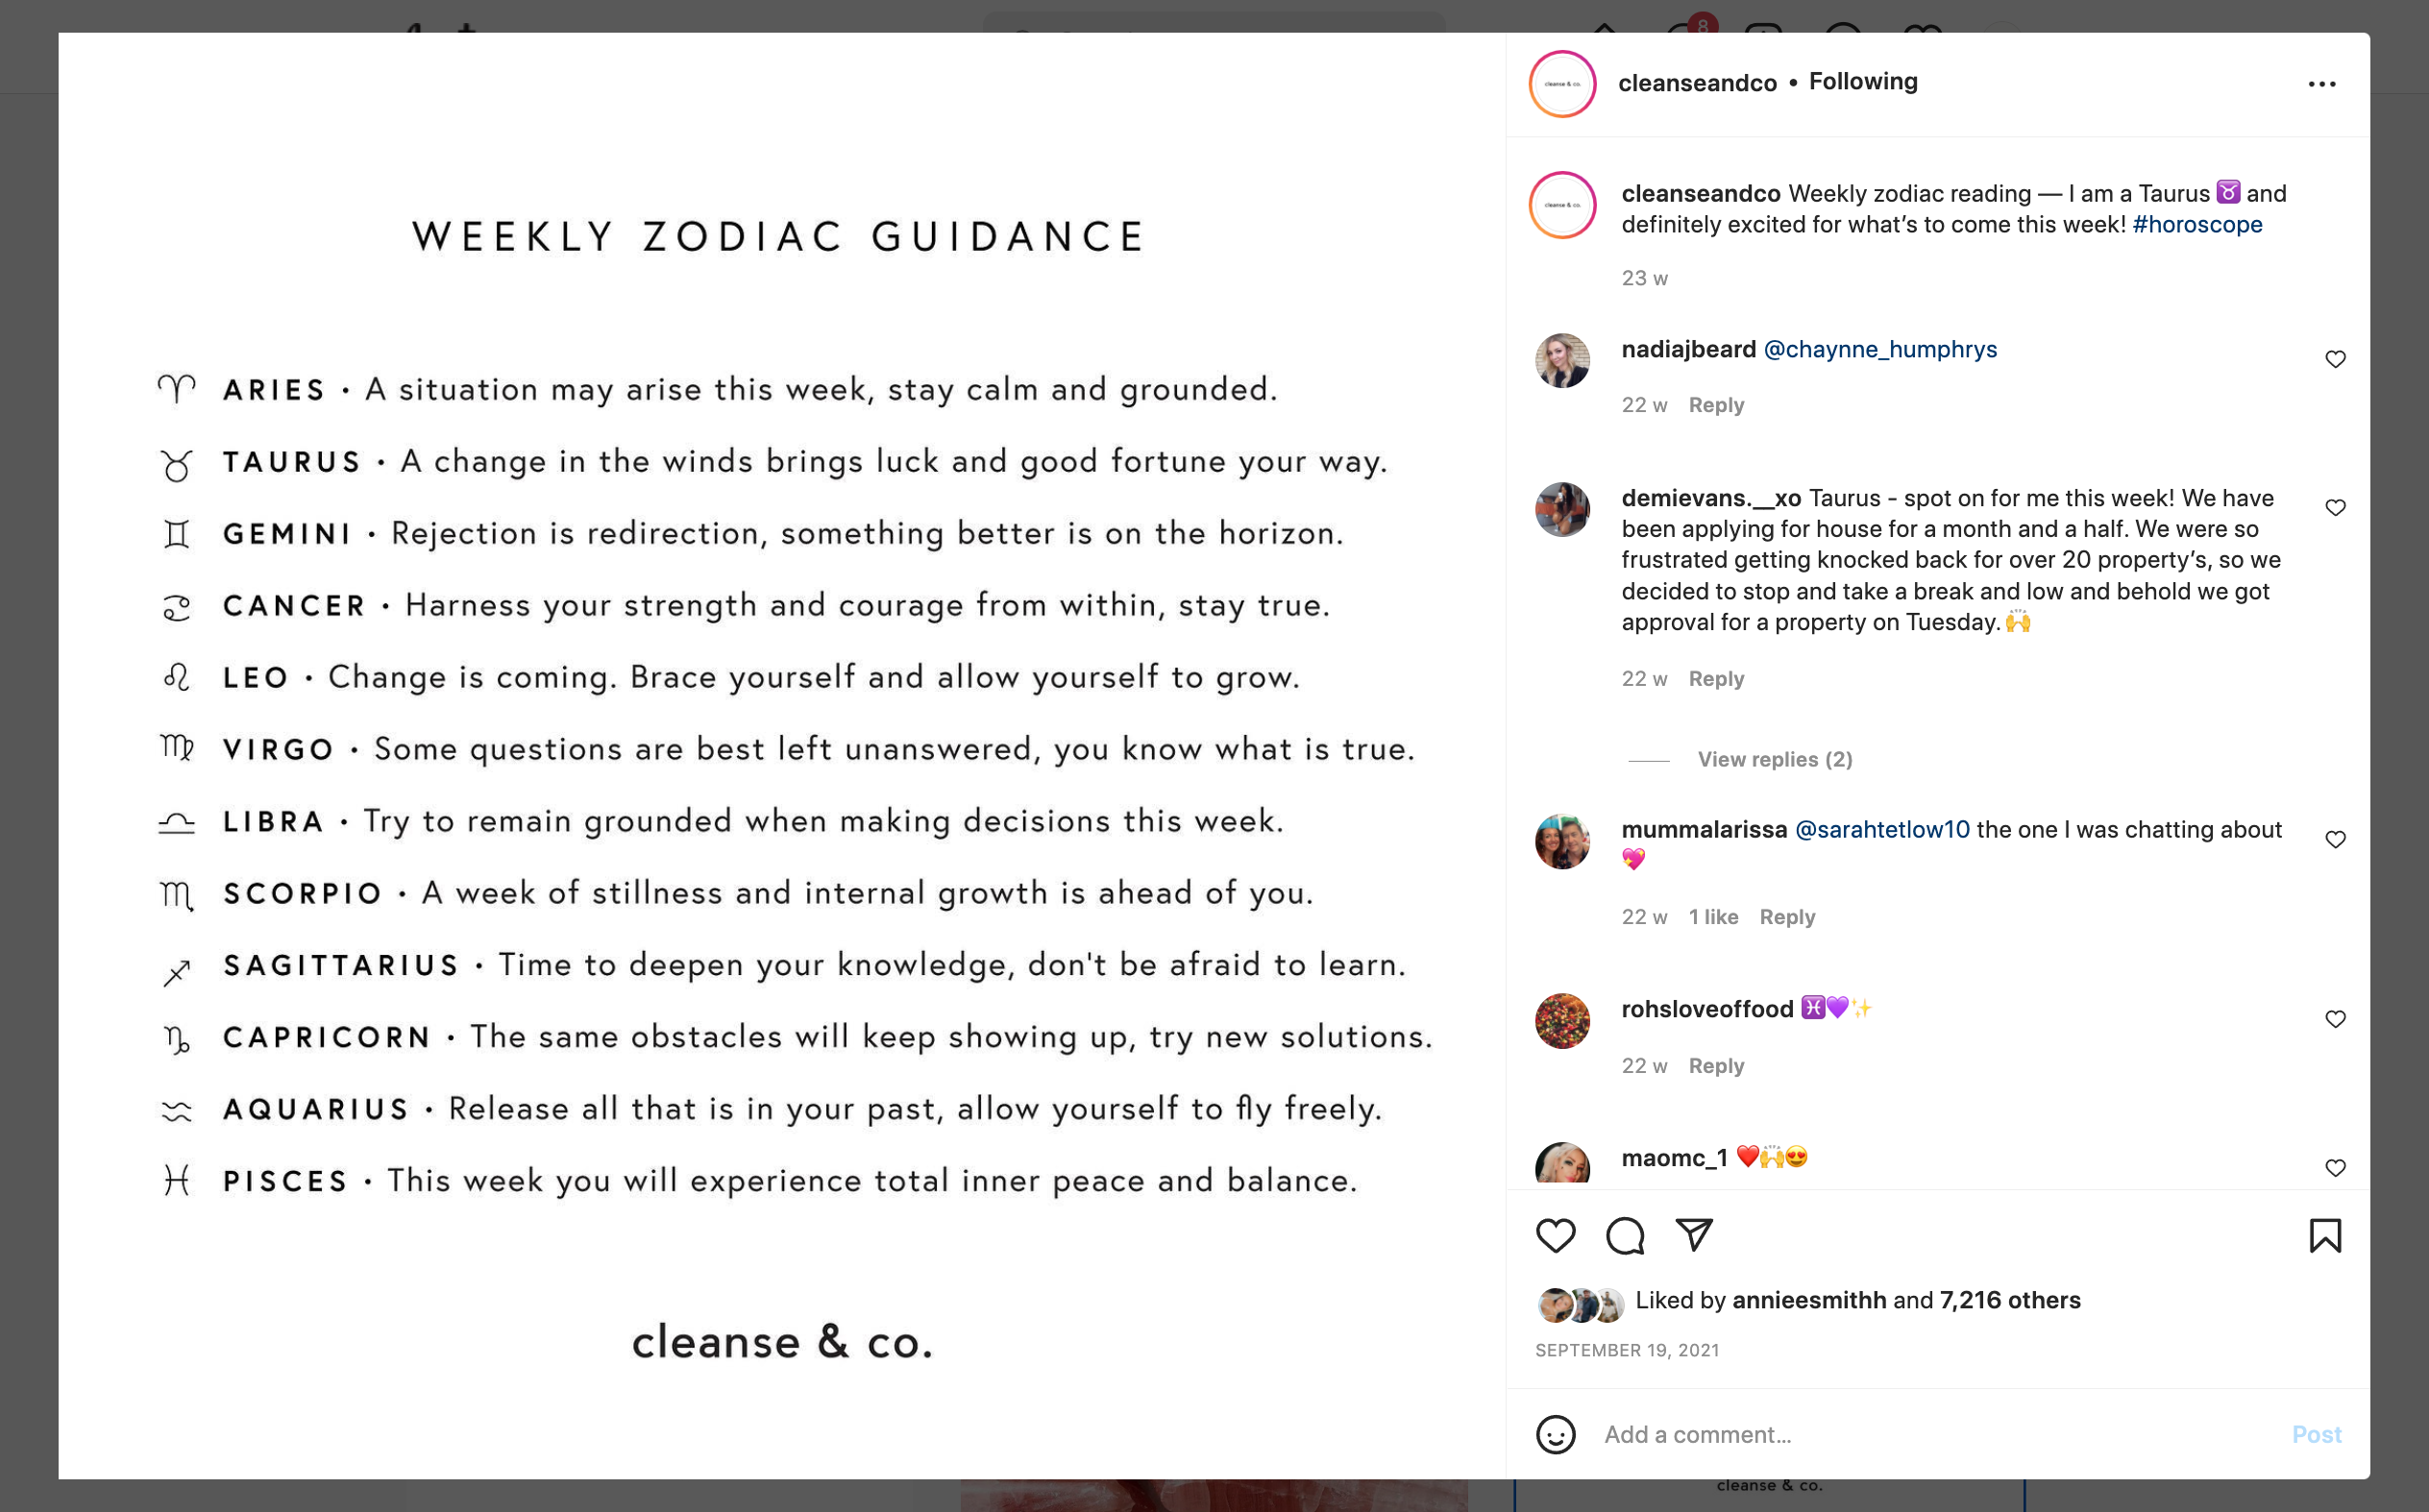 cleanse & co weekly zodiac horoscope instagram post